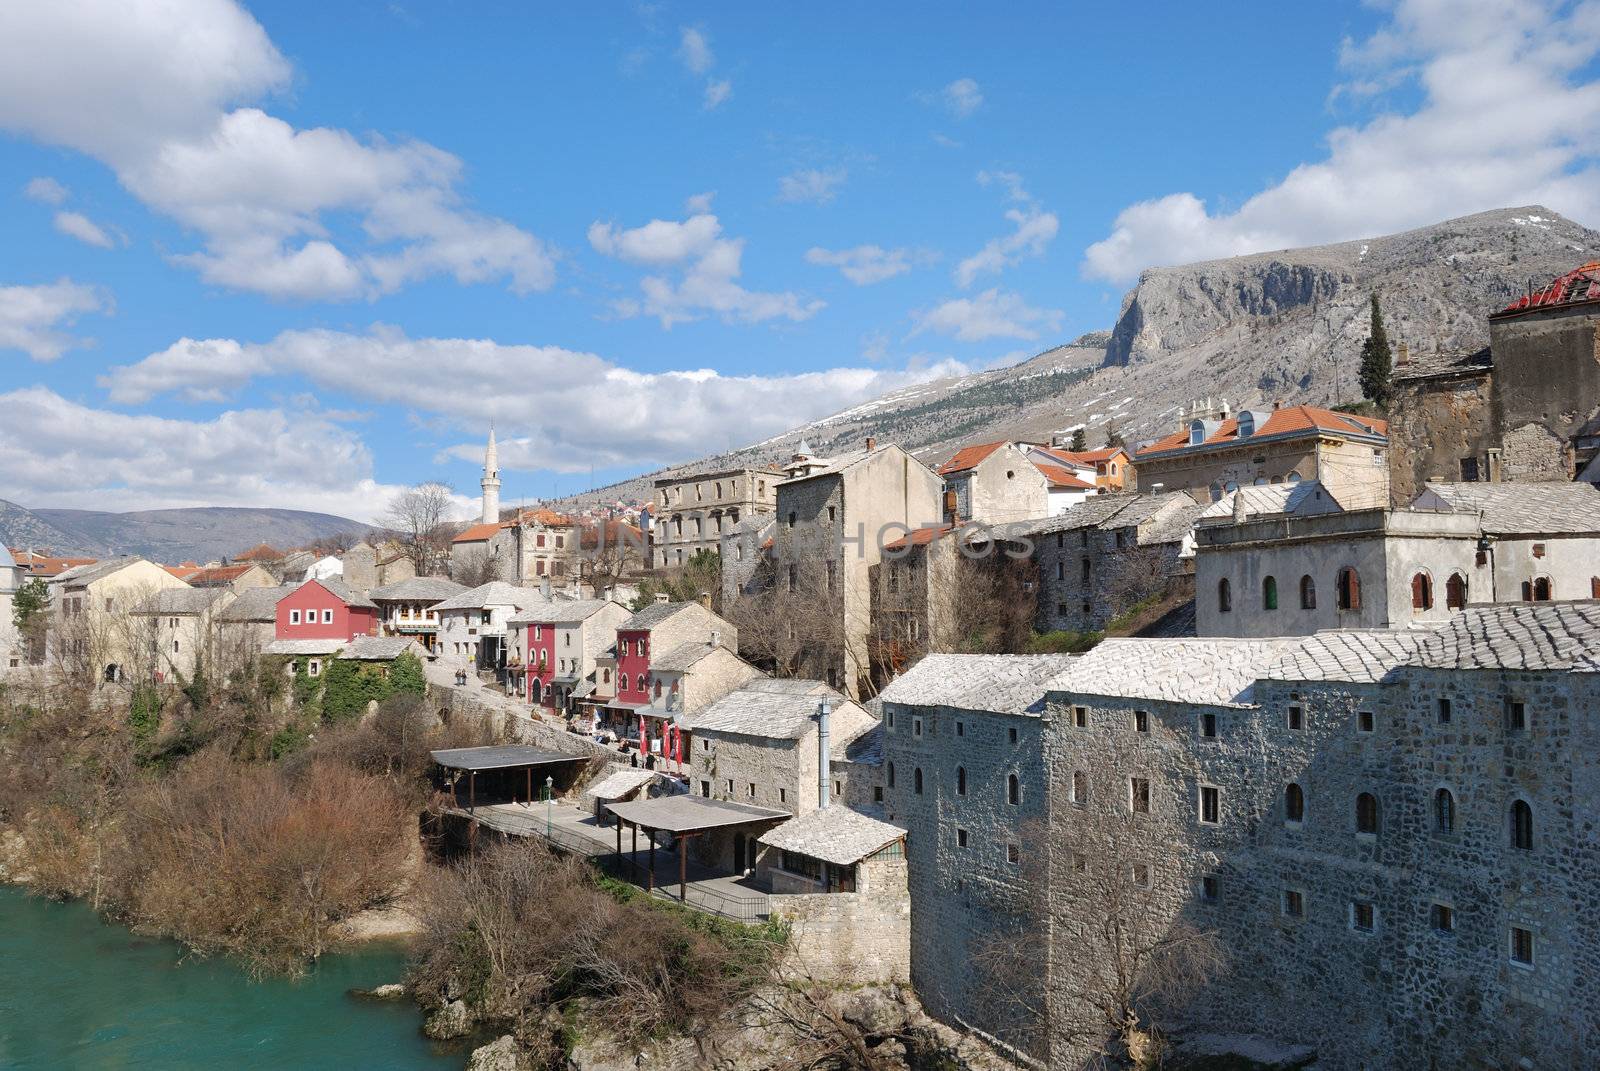 Mostar Old Town by goldenangel